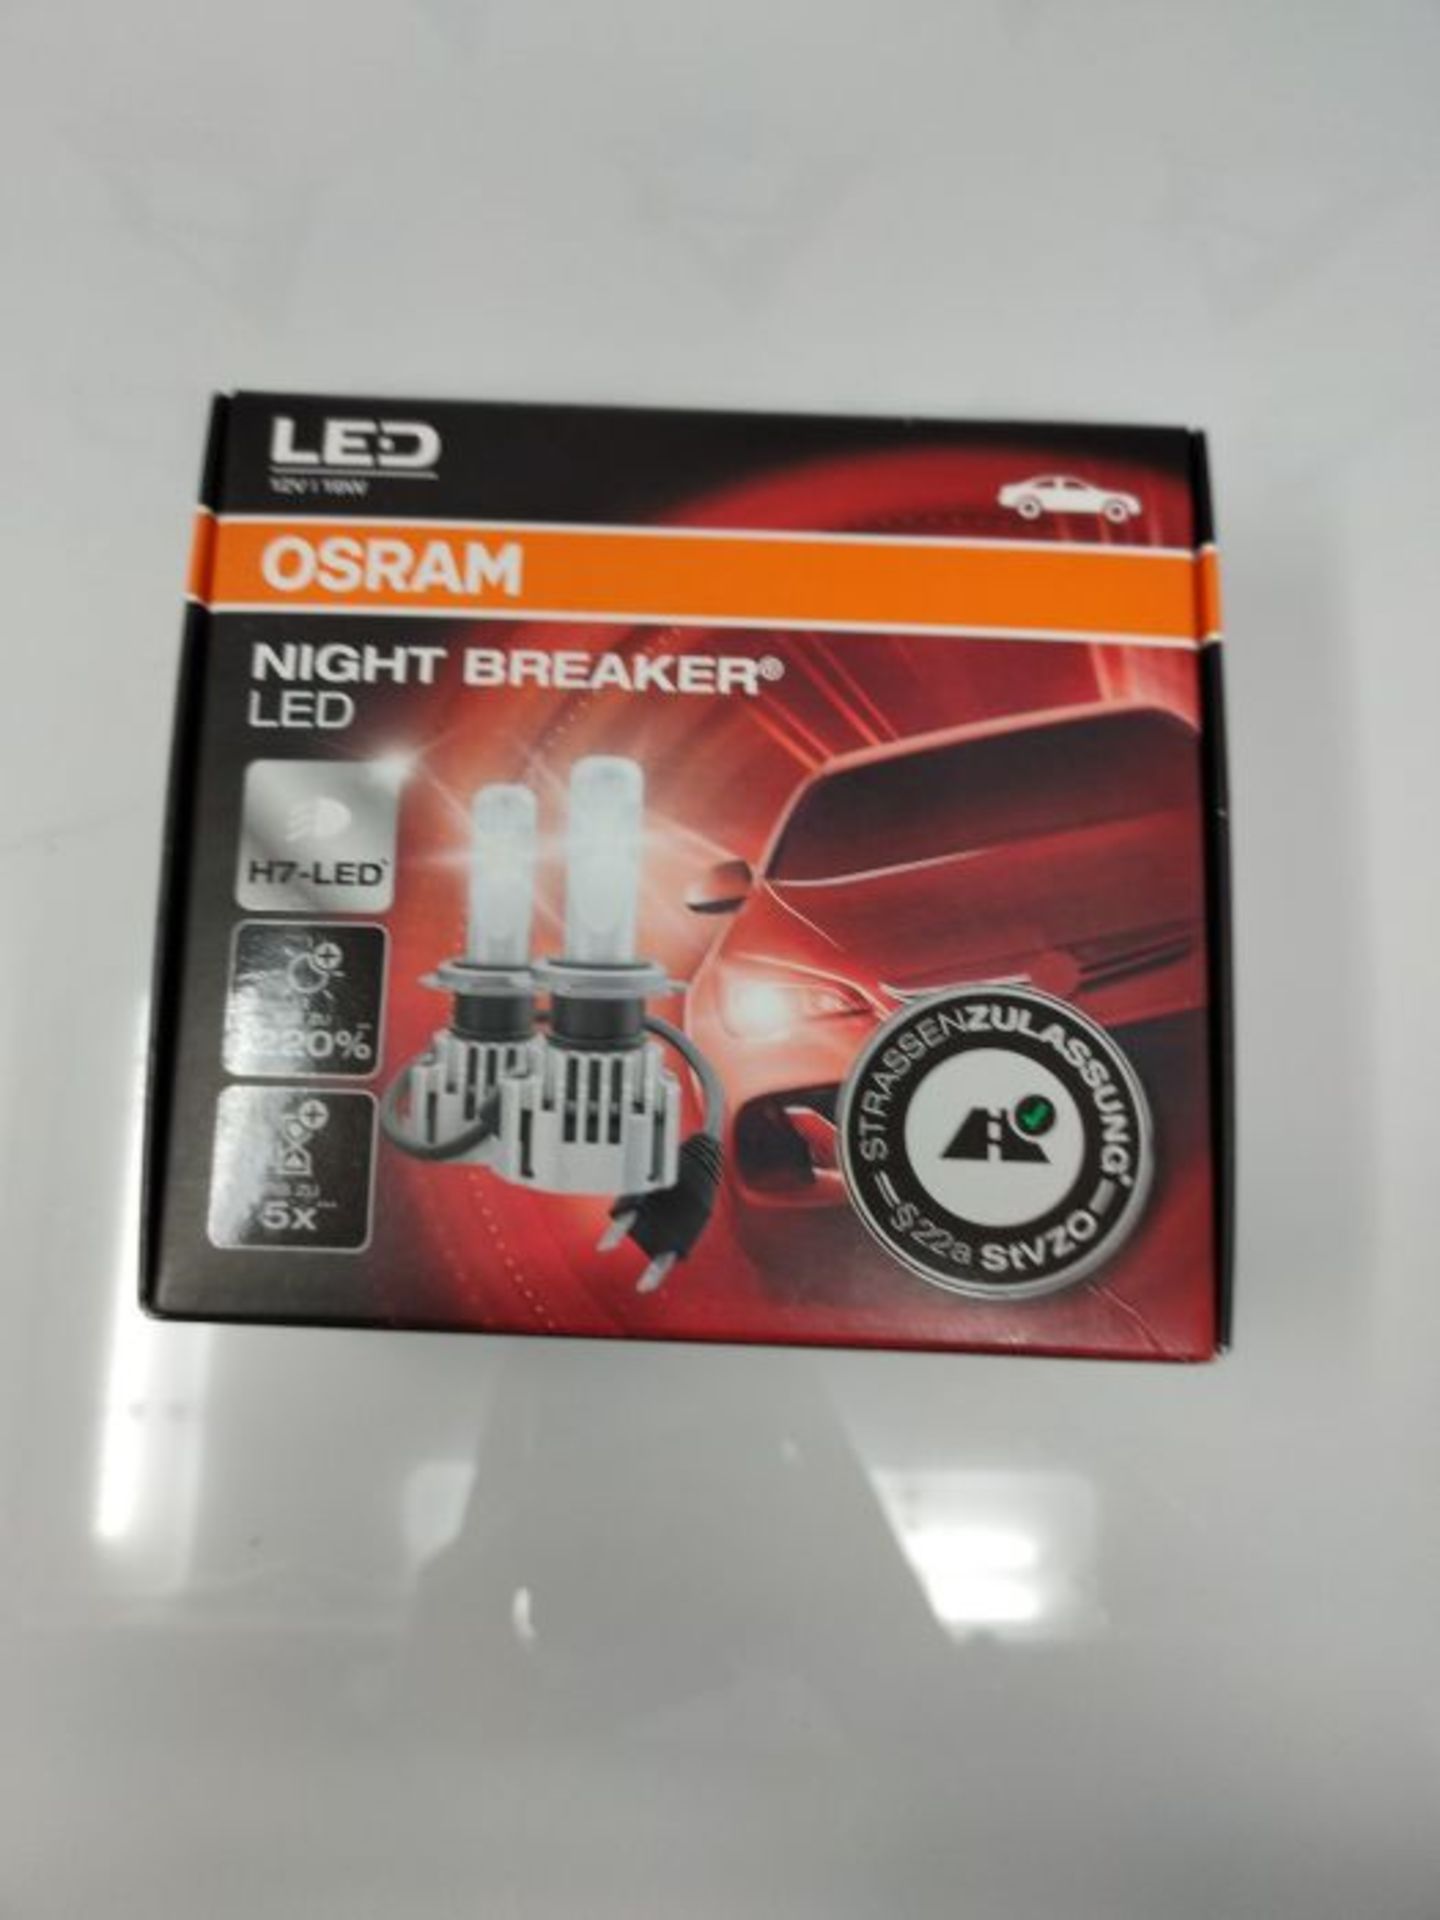 RRP £111.00 OSRAM NIGHT BREAKER H7-LED; bis zu 220 % mehr Helligkeit, erstes legales LED H7 Abblen